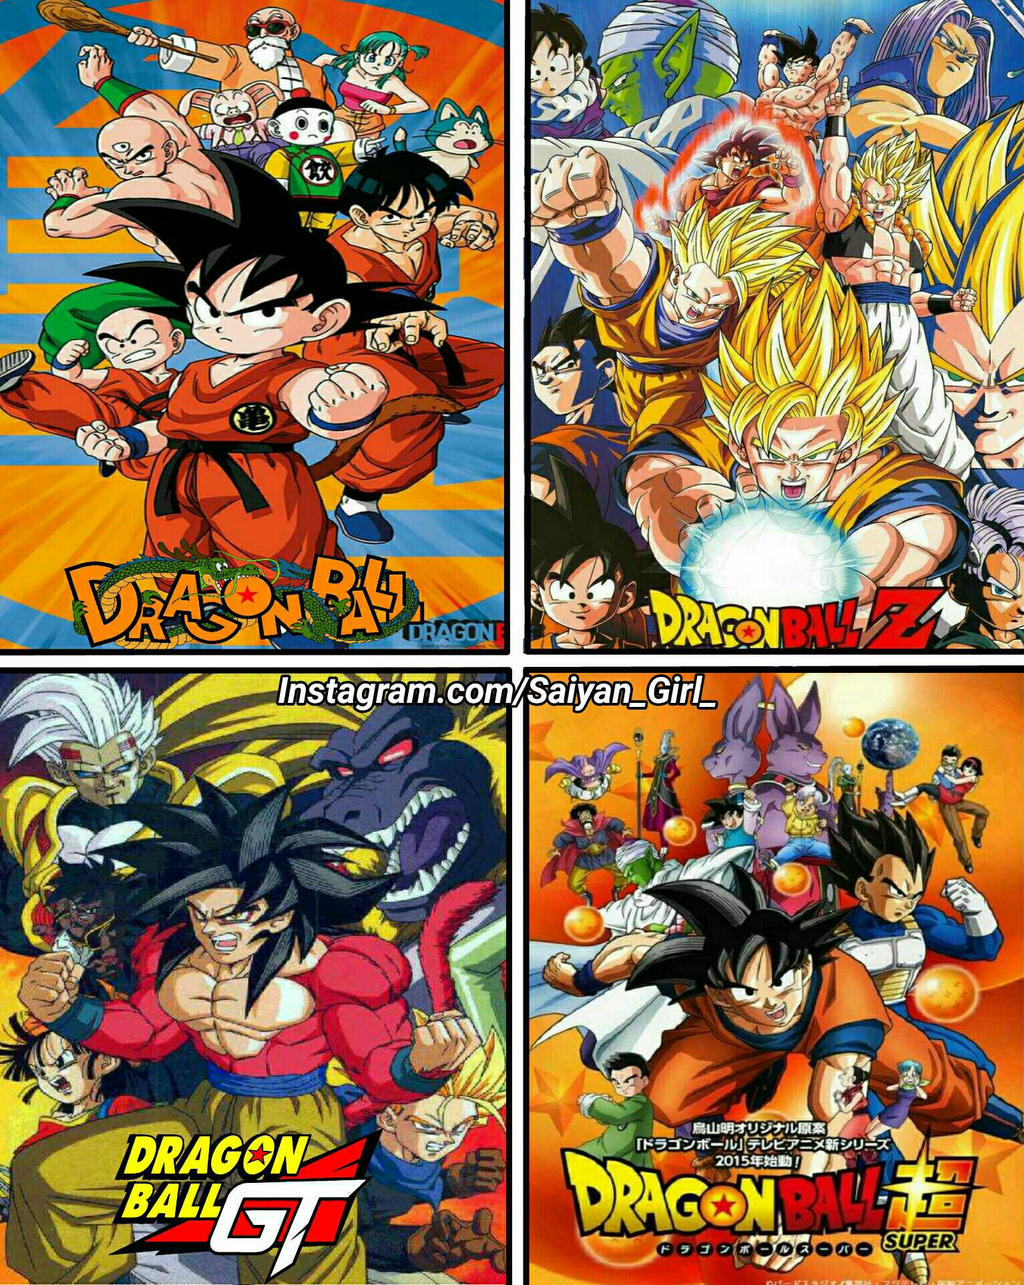 Dragon Ball GT - Manga Cover by janosgfx on DeviantArt